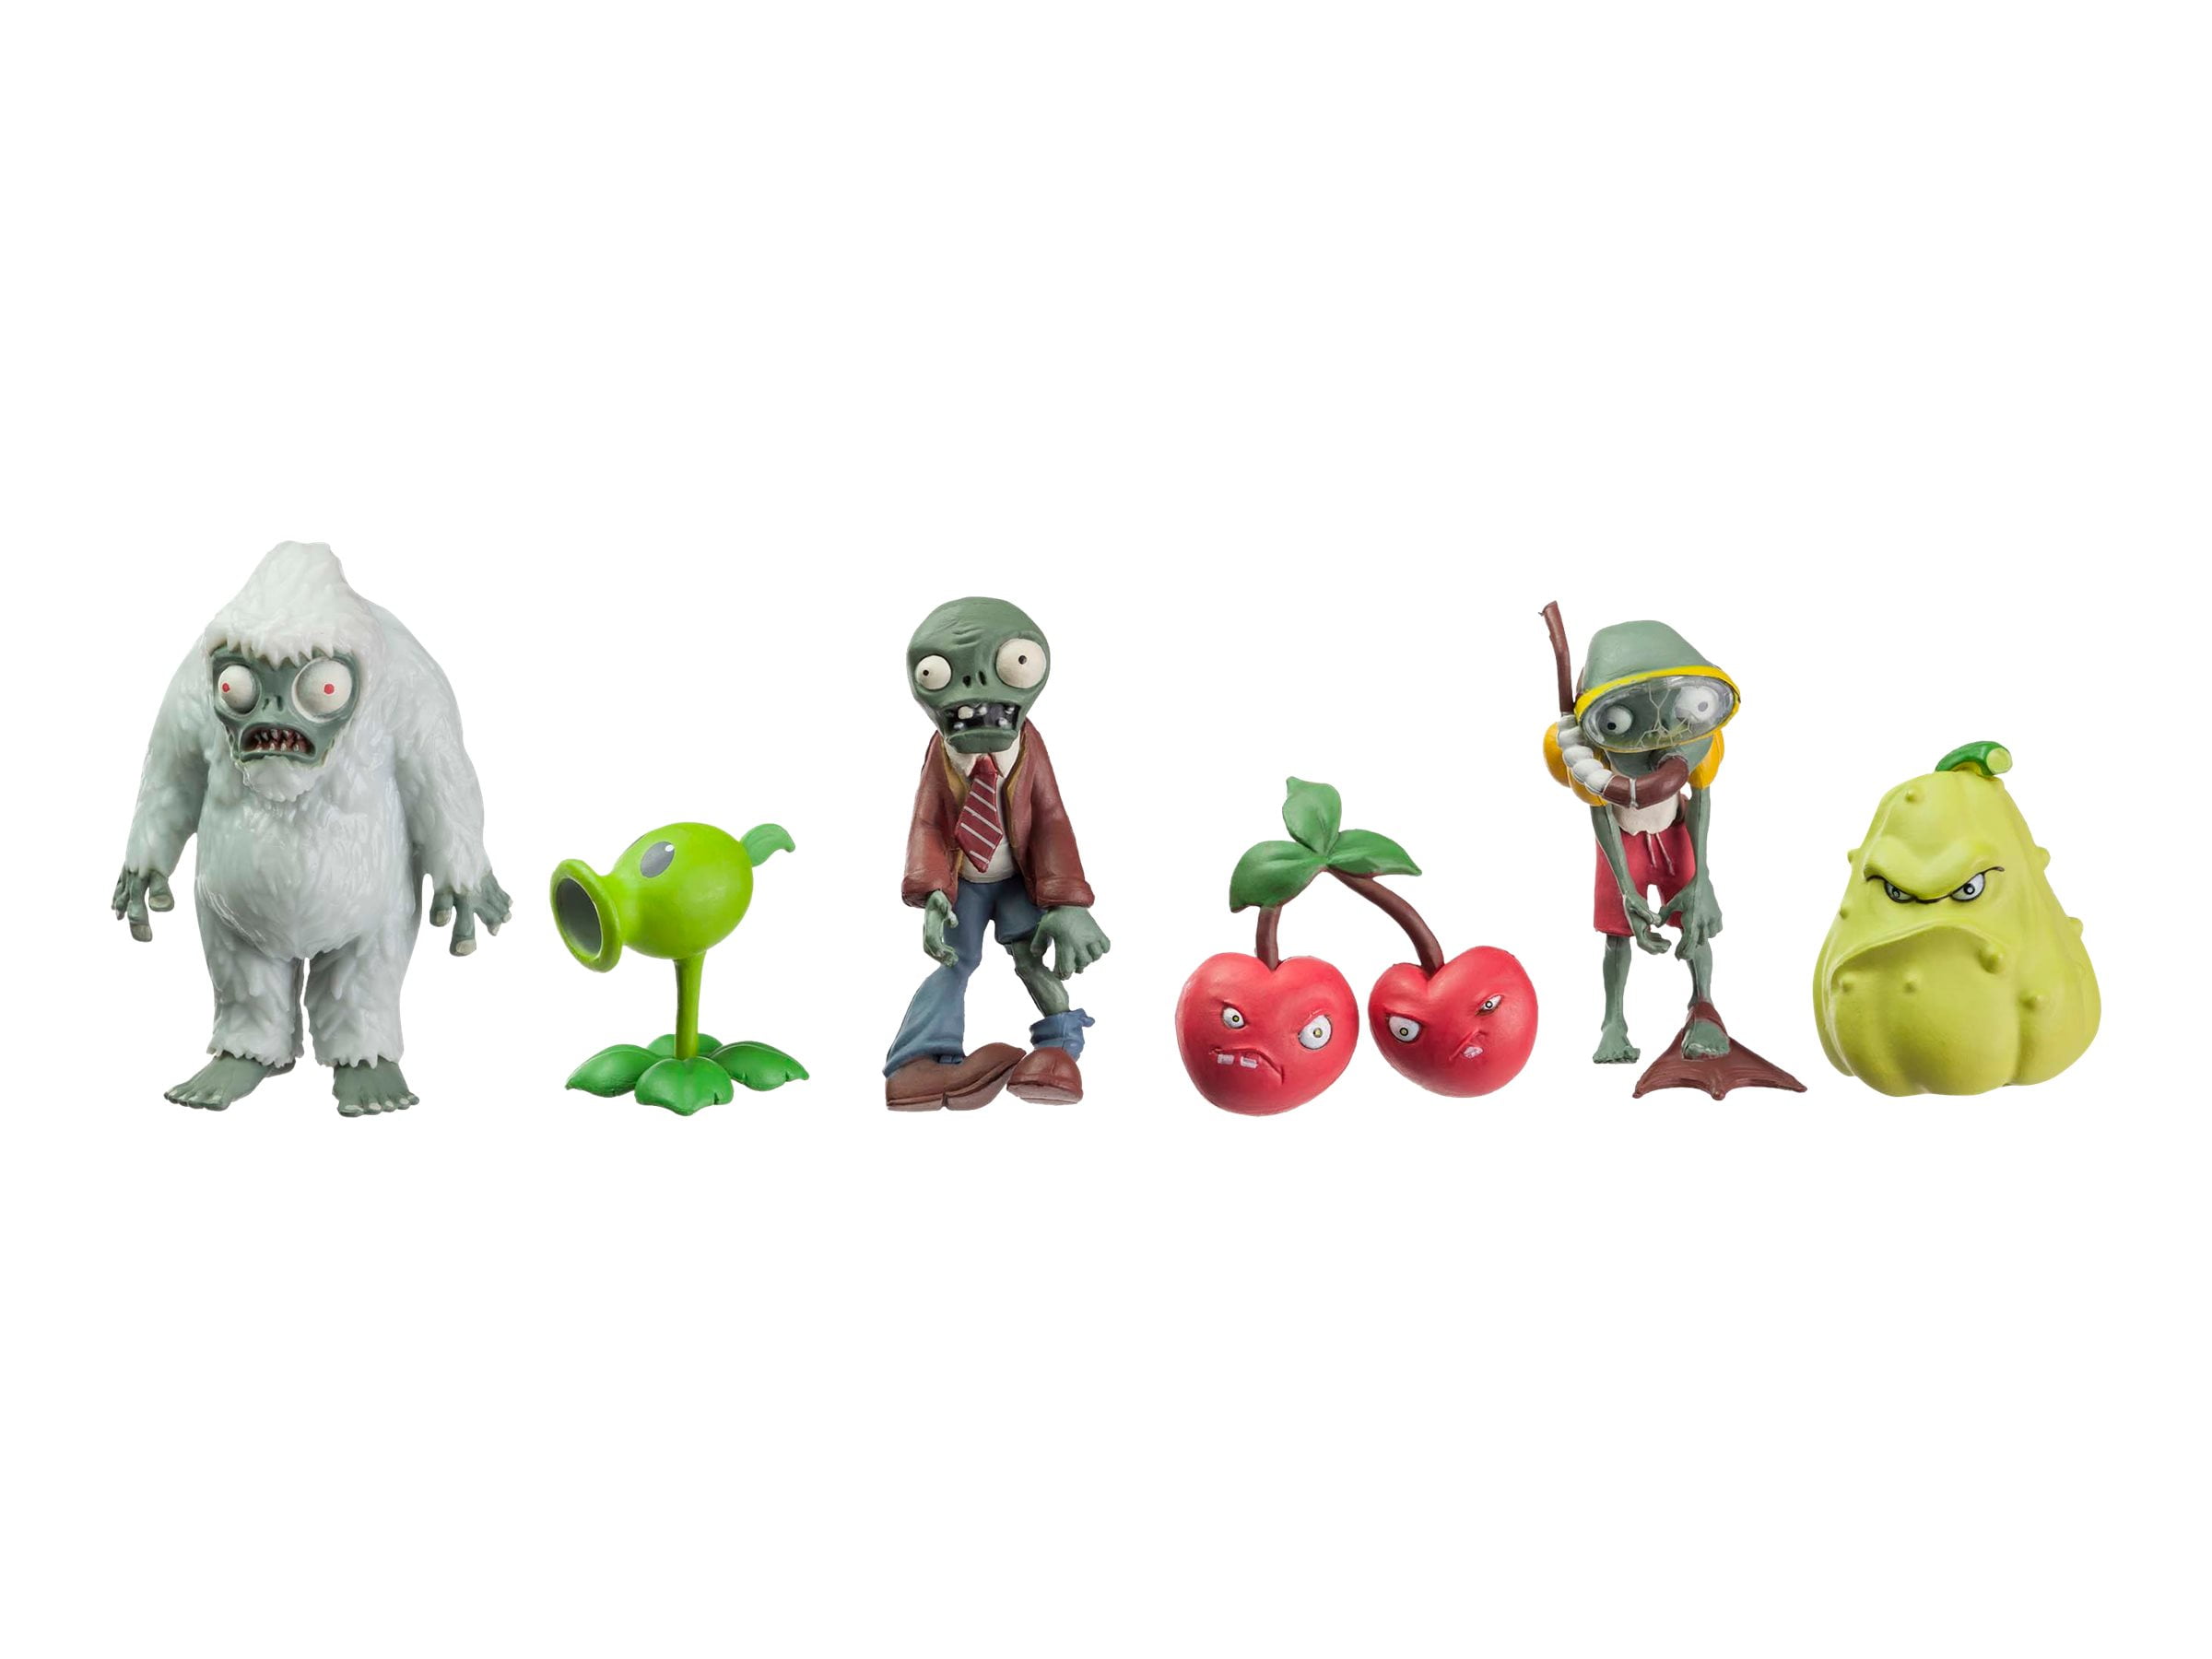 Plants vs. Zombies Exploding Zombie 6 Action Figure Jazwares - ToyWiz